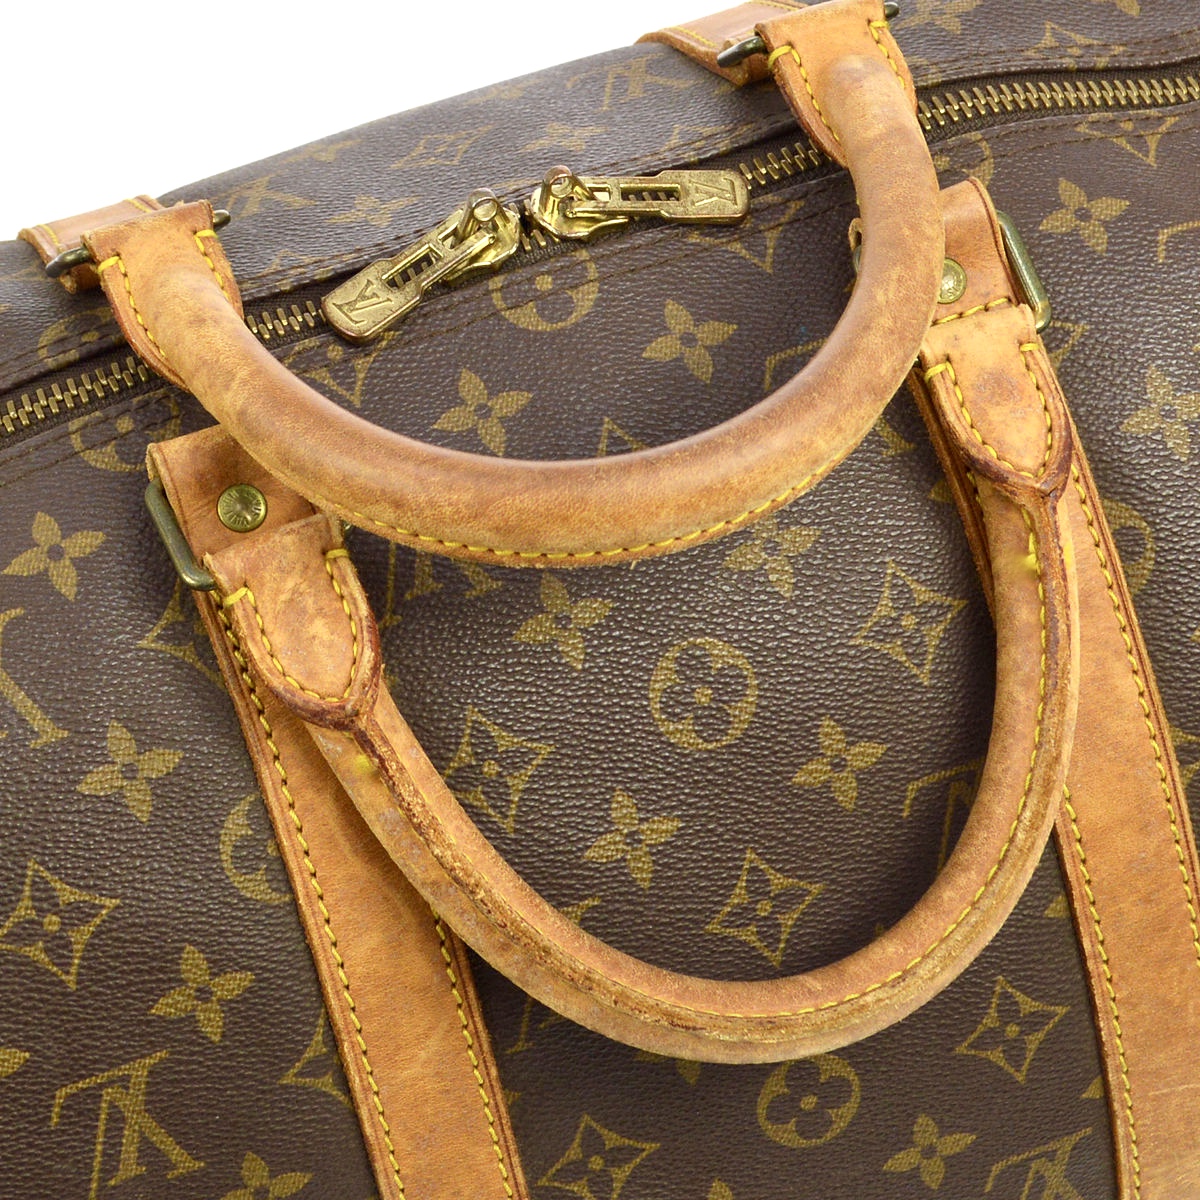 PRELOVED Louis Vuitton Keepall 50 Monogram Duffel Bag FL0012 040523 –  KimmieBBags LLC